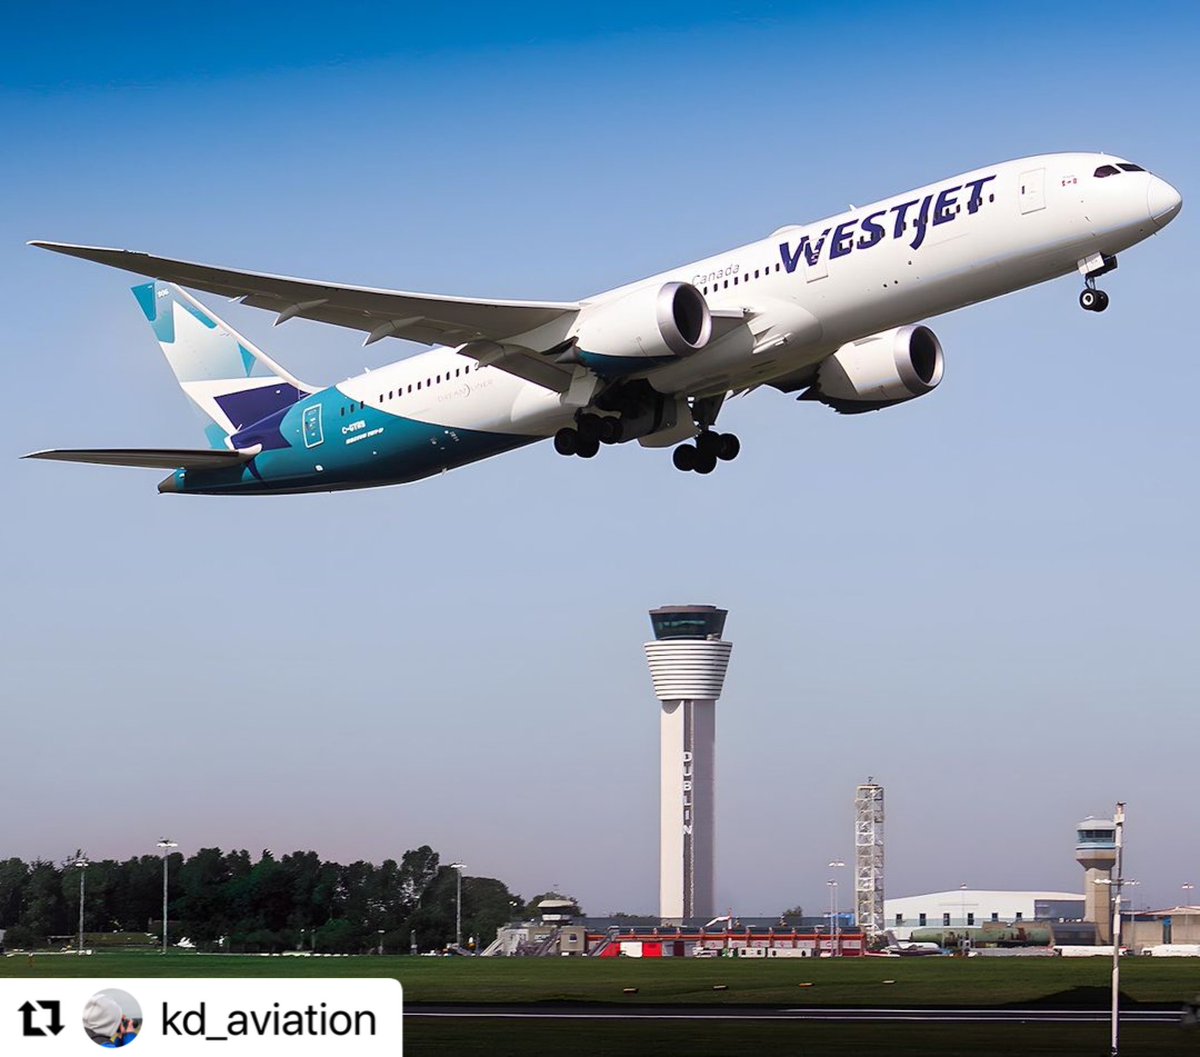 #WestJet started 3xweekly flights from #Calgary to #Rome on 16MAR, daily on 3MAY, 6xweekly on 8OCT, 3xweekly on 26OCT

#InAviation #AVGEEK @WestJet @WestJetNews @FlyYYC @AeroportidiRoma